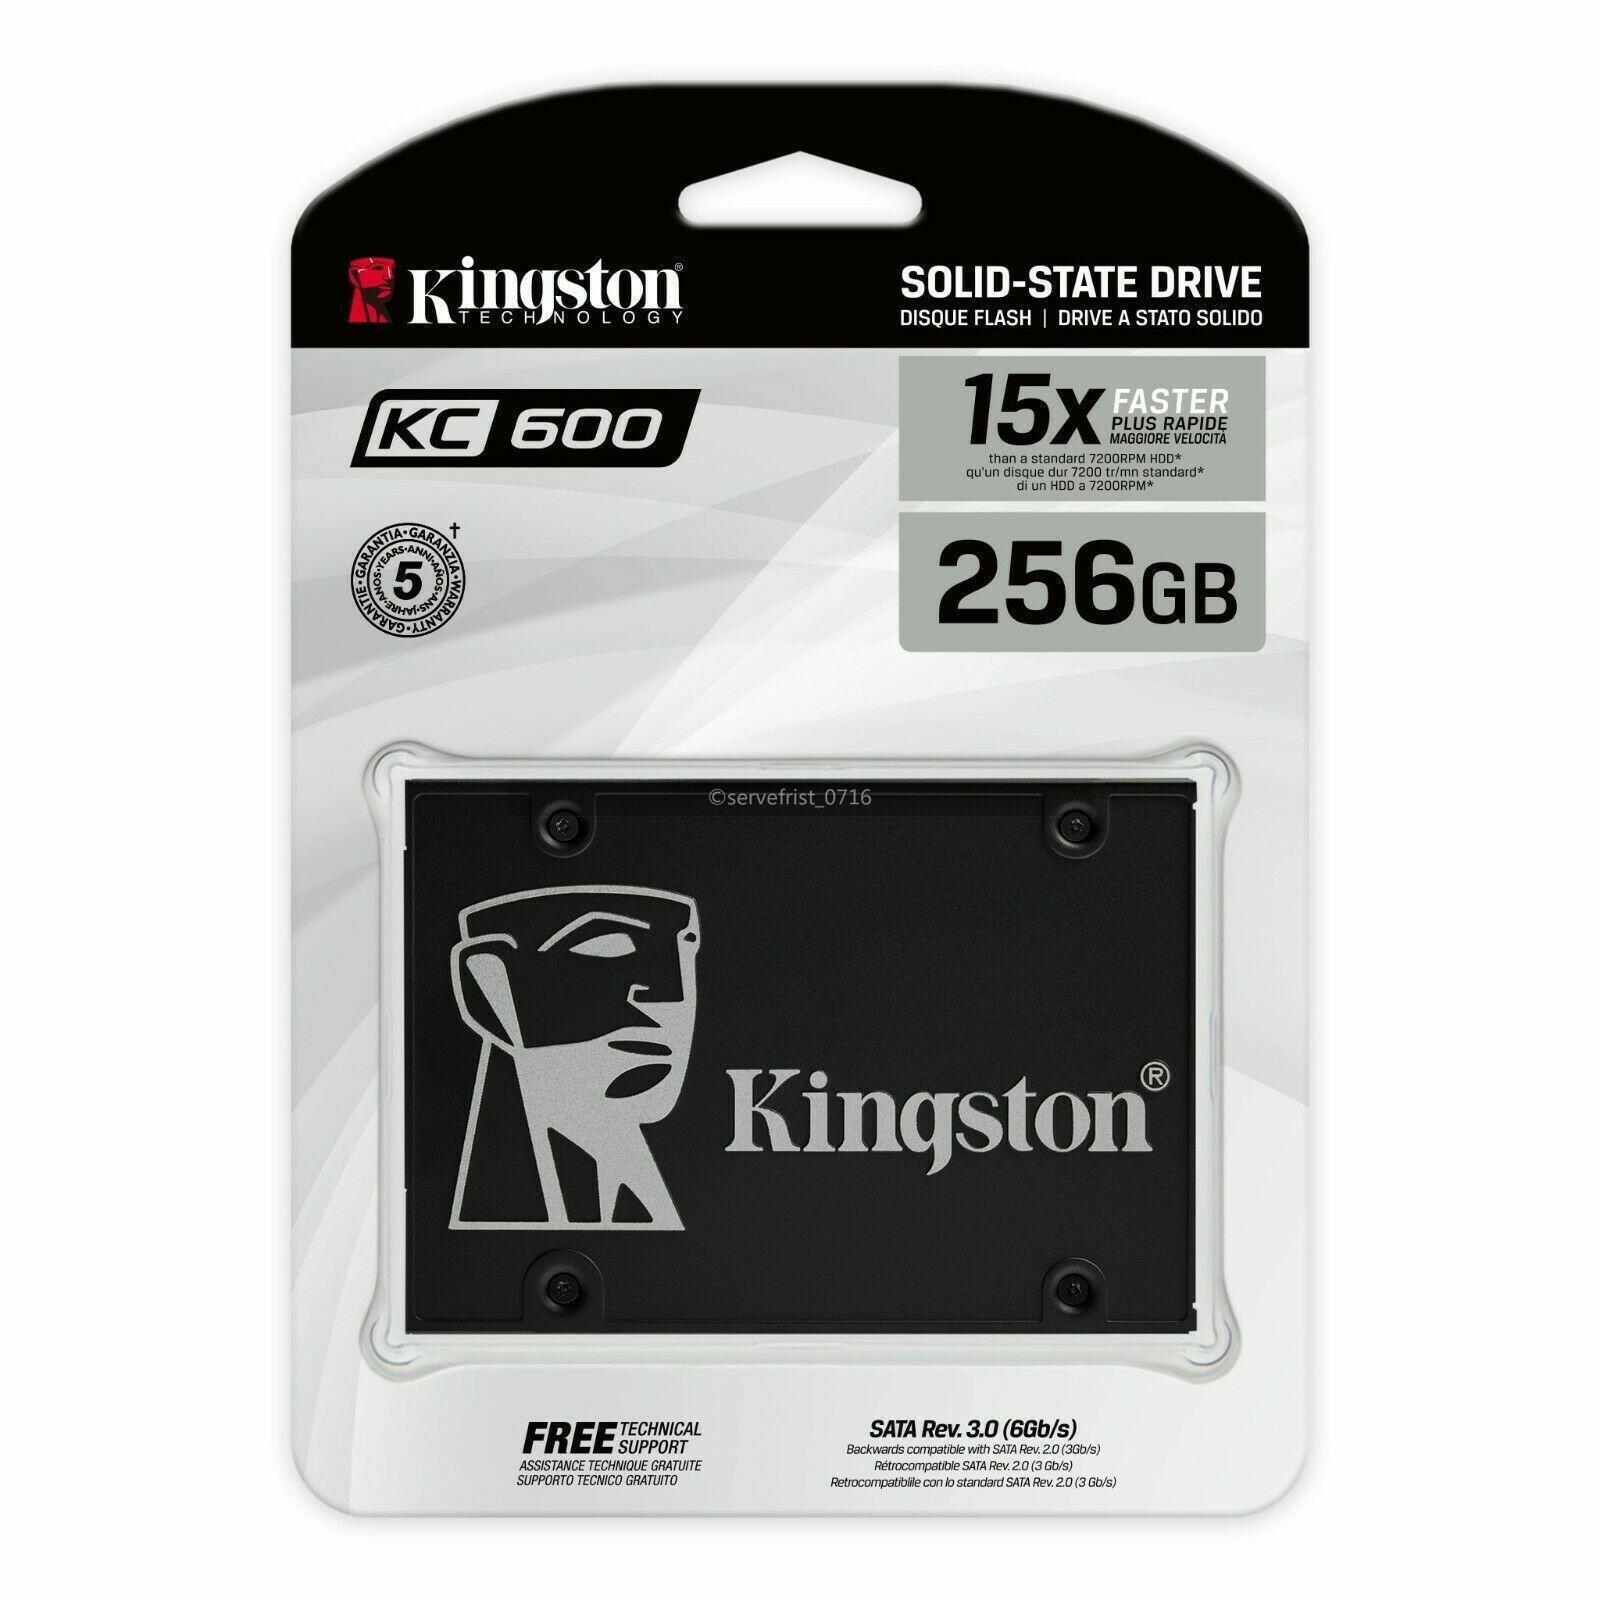 Kingston Internal SSD KC600 2.5in SATA III 256GB Solid State Drive Hard Drives